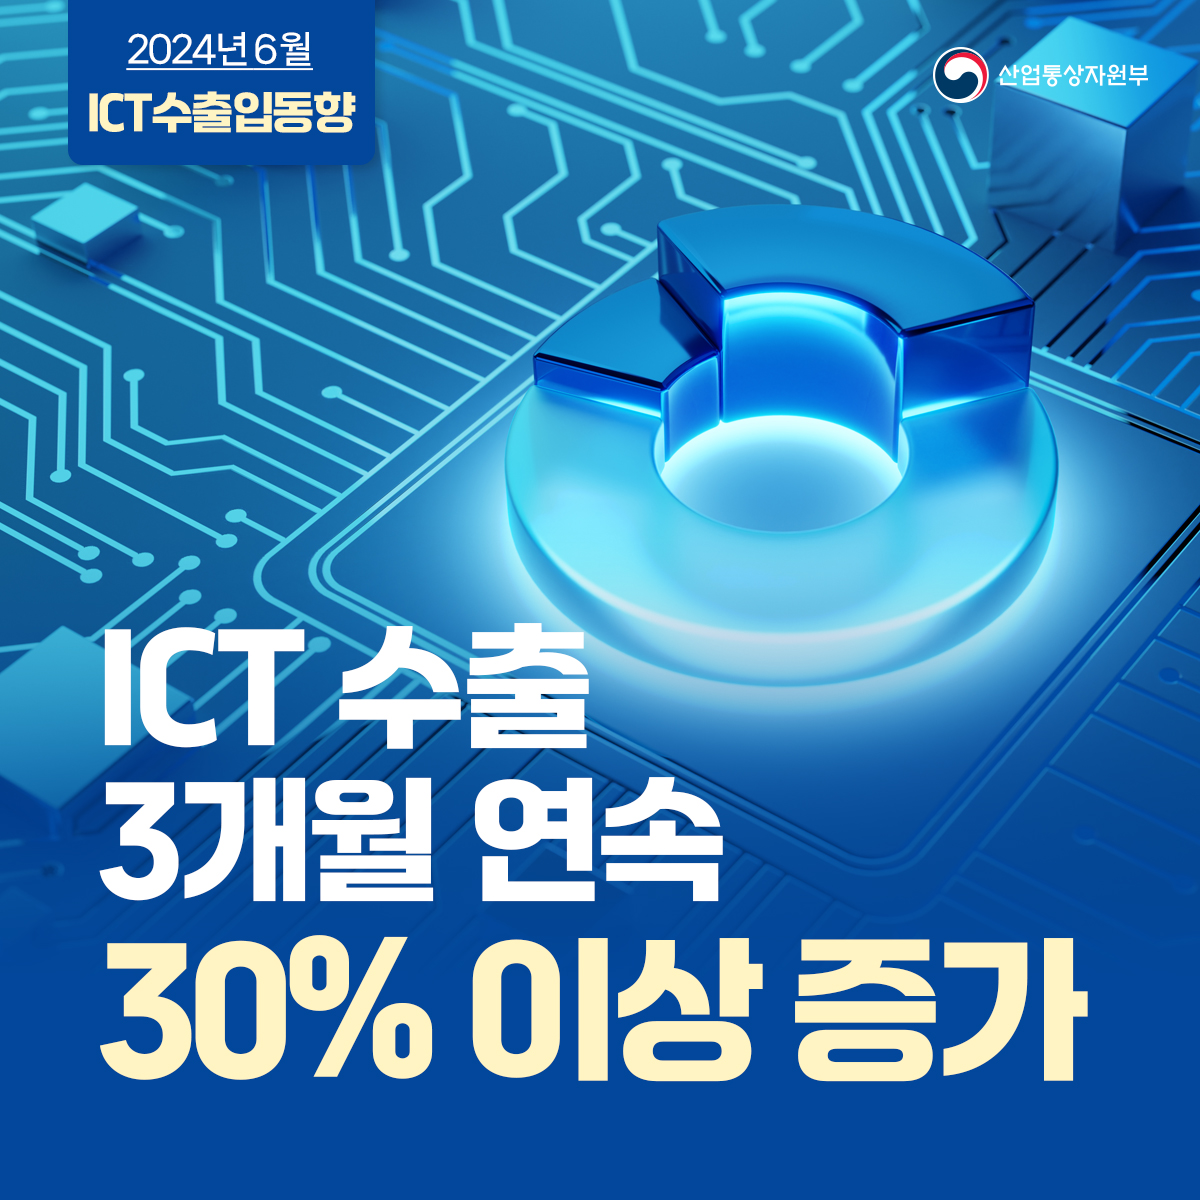 ICT 수출, 3개월 연속 30% 이상 증가!